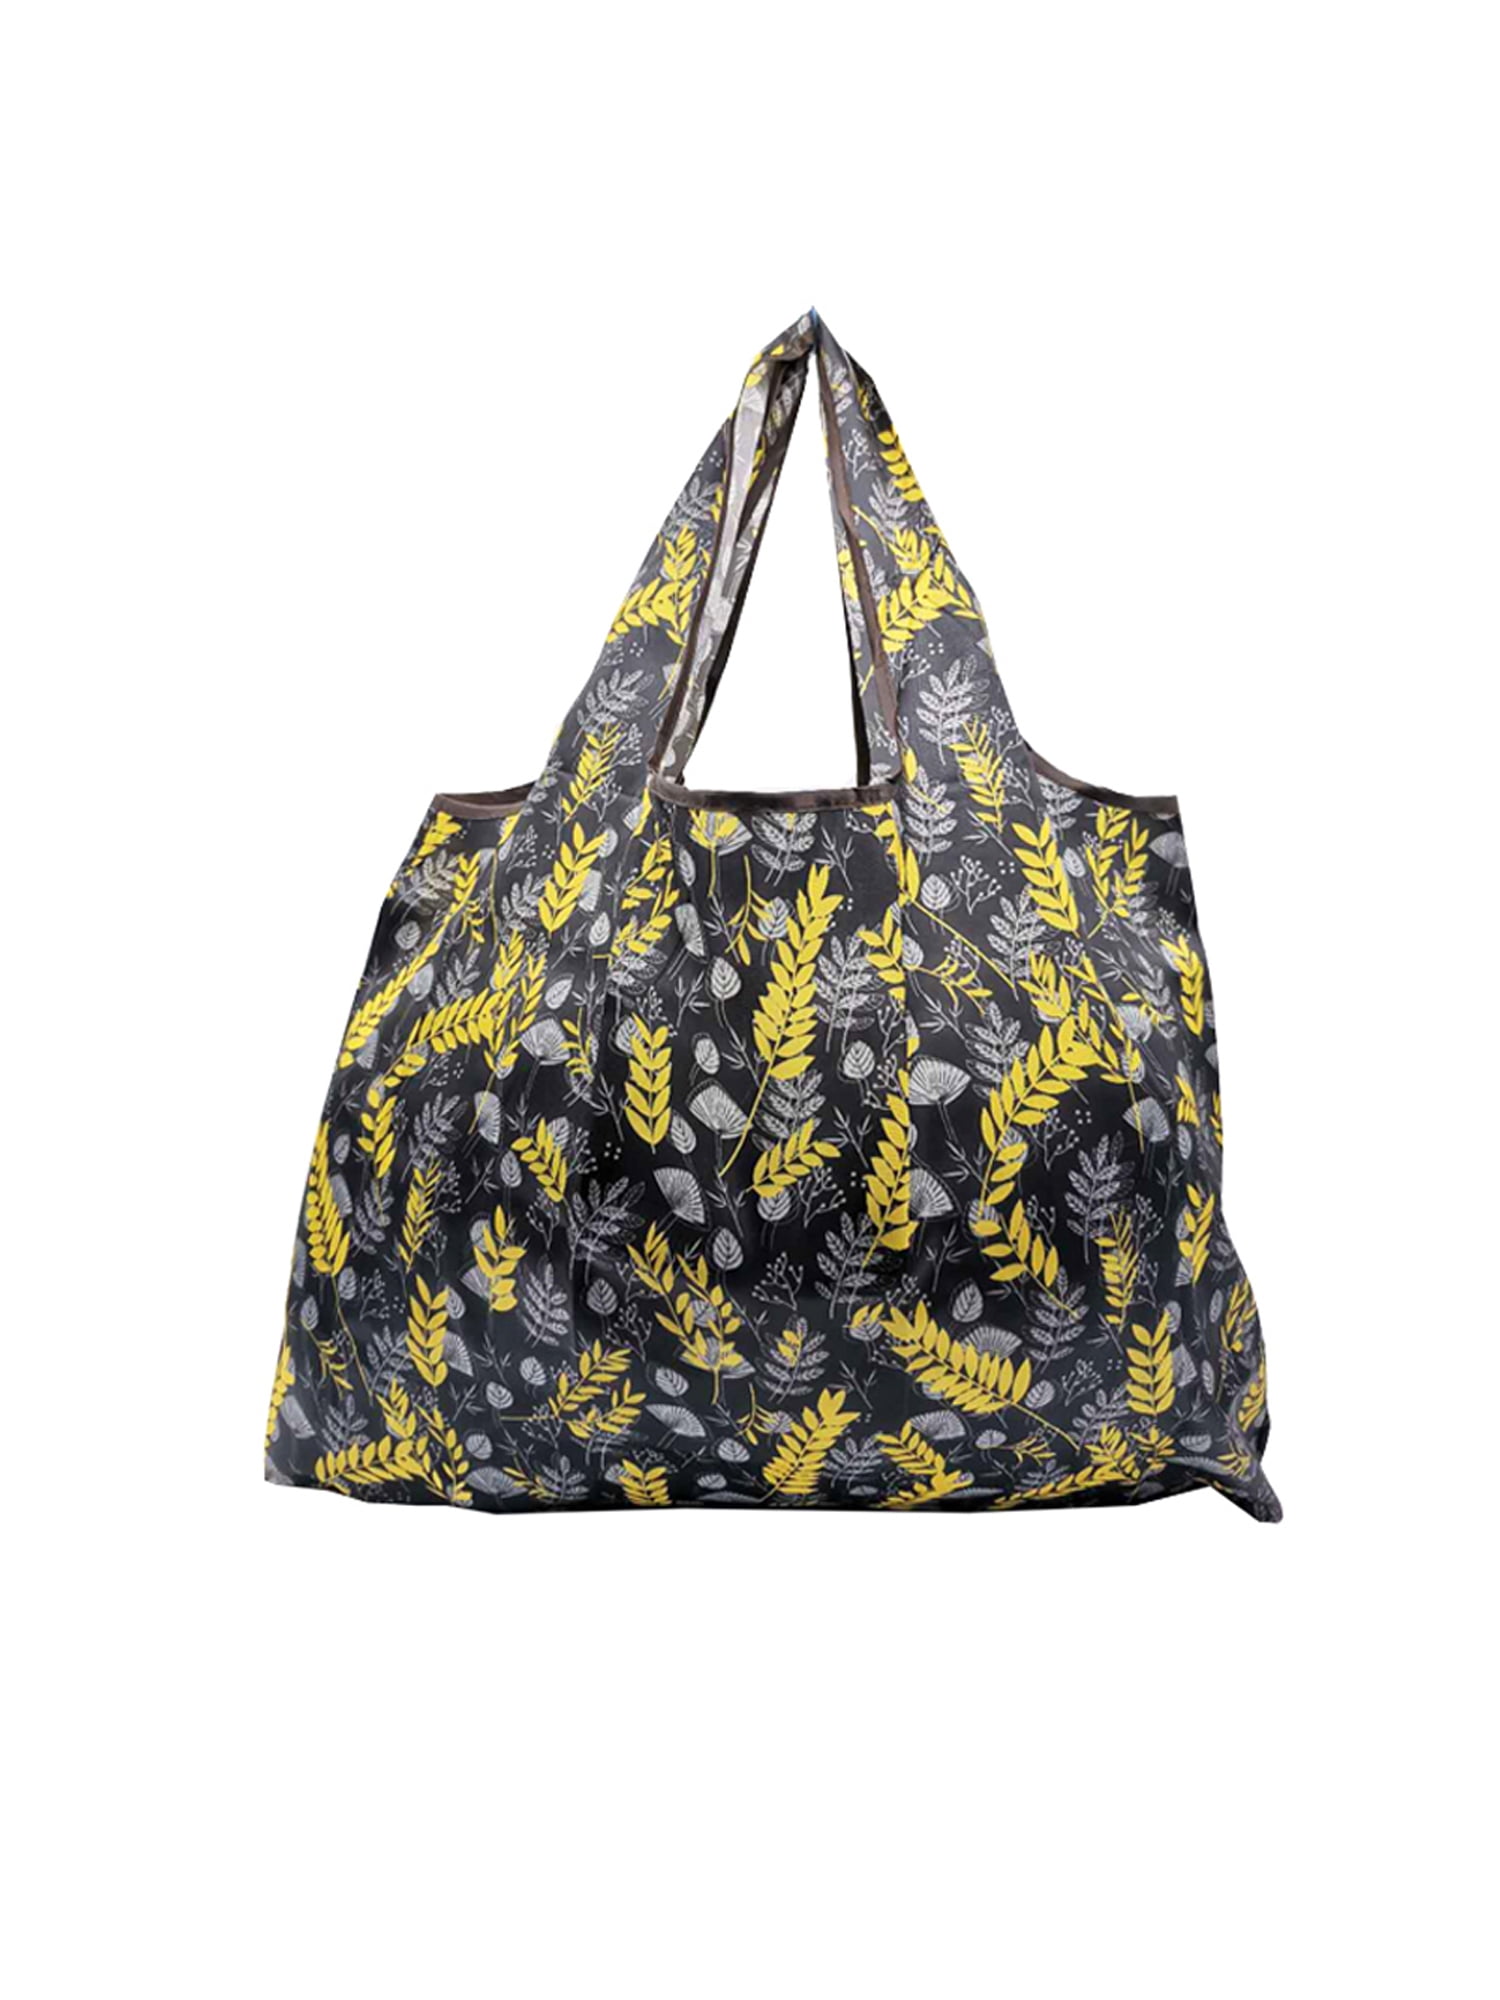 Tote Waterproof Shopping Bags Reusable Travel Grocery Bag Large Shoulder Handbag